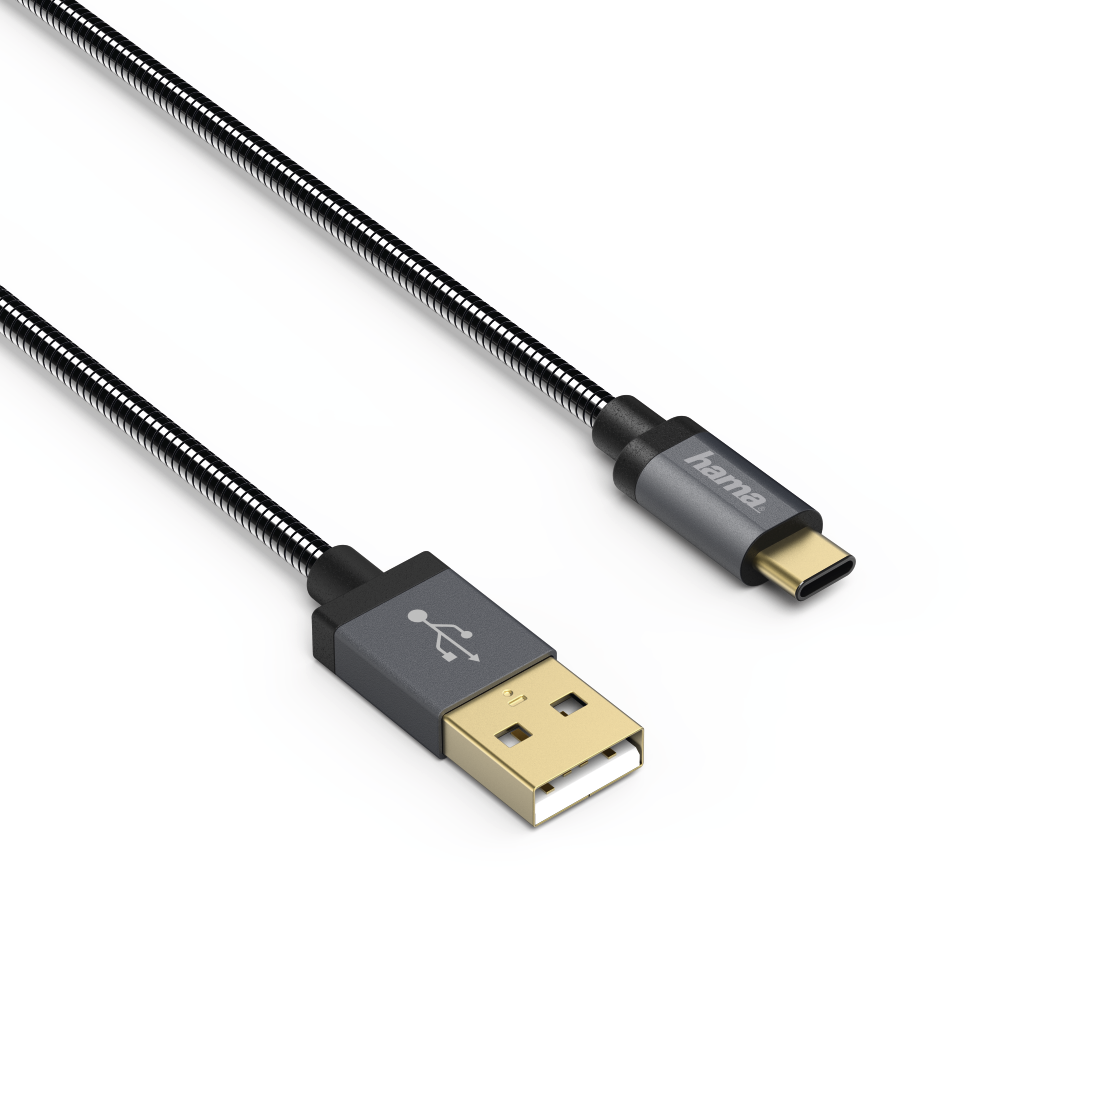 00135790 Hama "Elite" USB-C Cable, metal, gold-plated, anthracite, 0.75 m |  hama.com